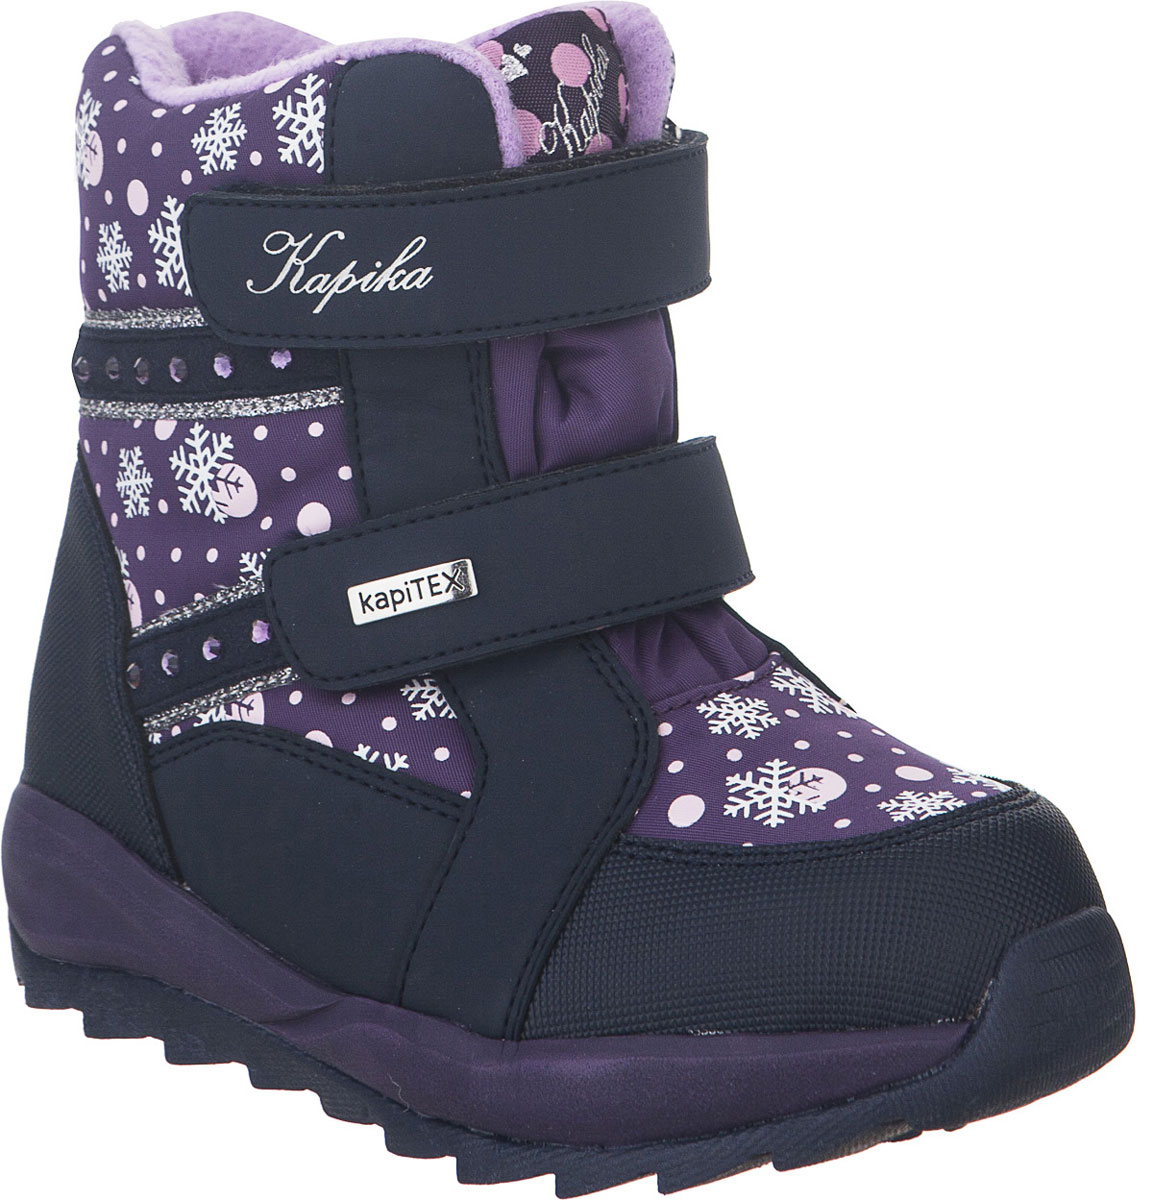 Ботинки для девочки Kapika, цвет: фиолетовый, темно-синий. 42240-2. Размер 31